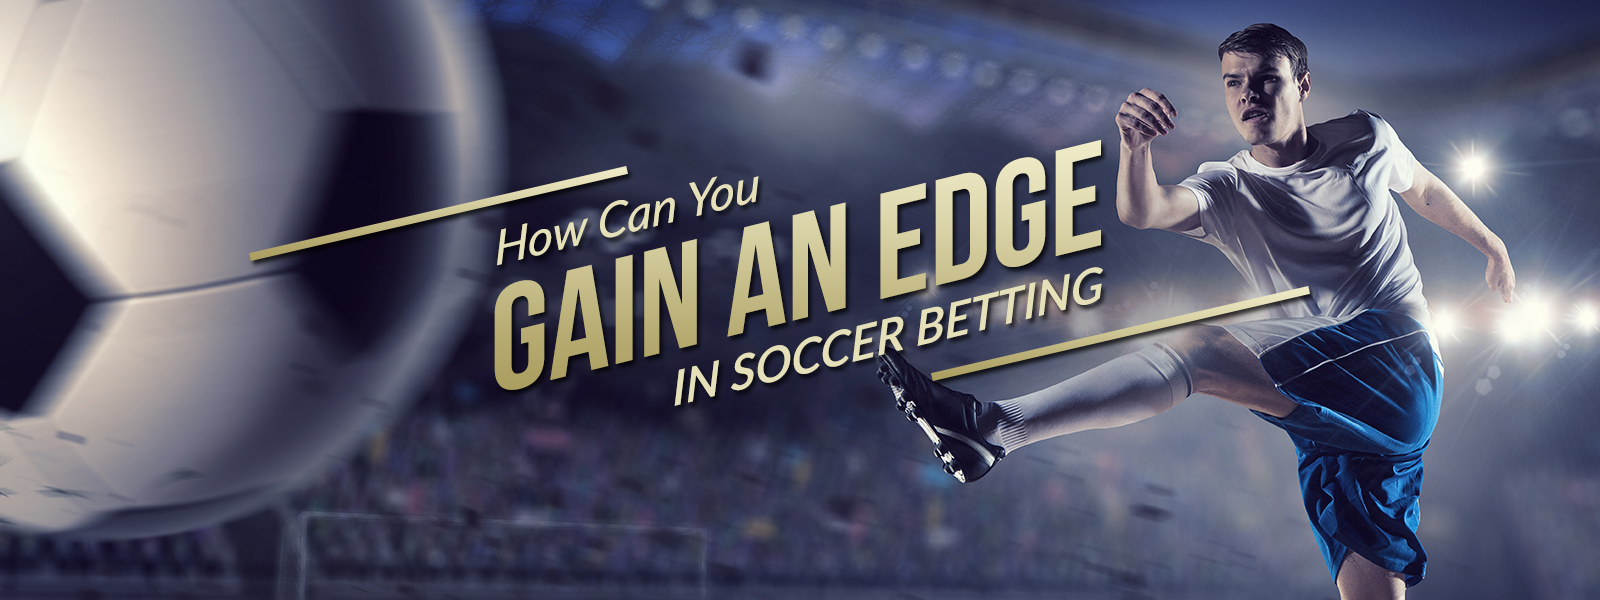 Gaining Edge In Soccer Betting